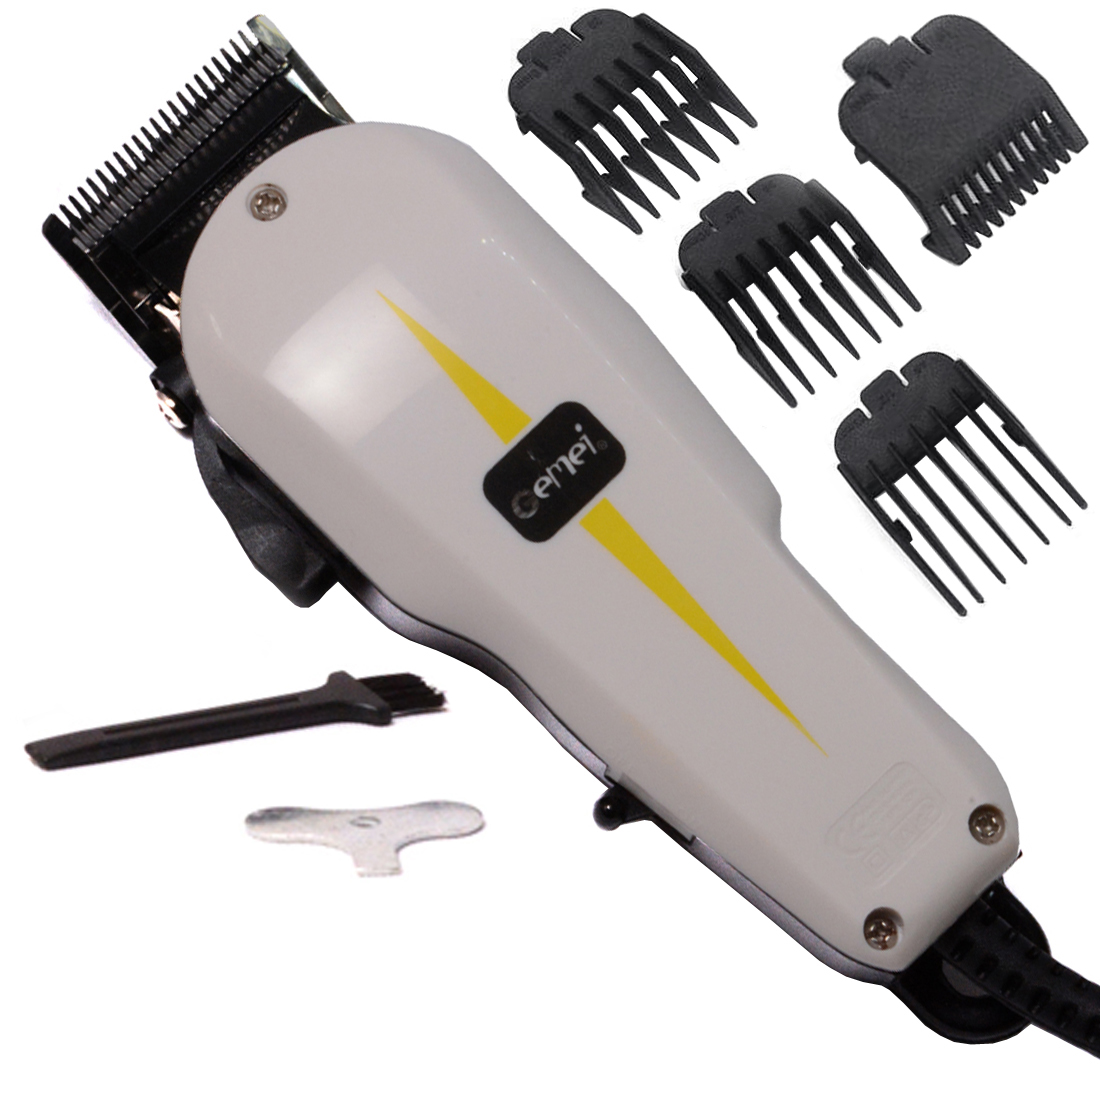 maxel electric hair beard trimmer reviews